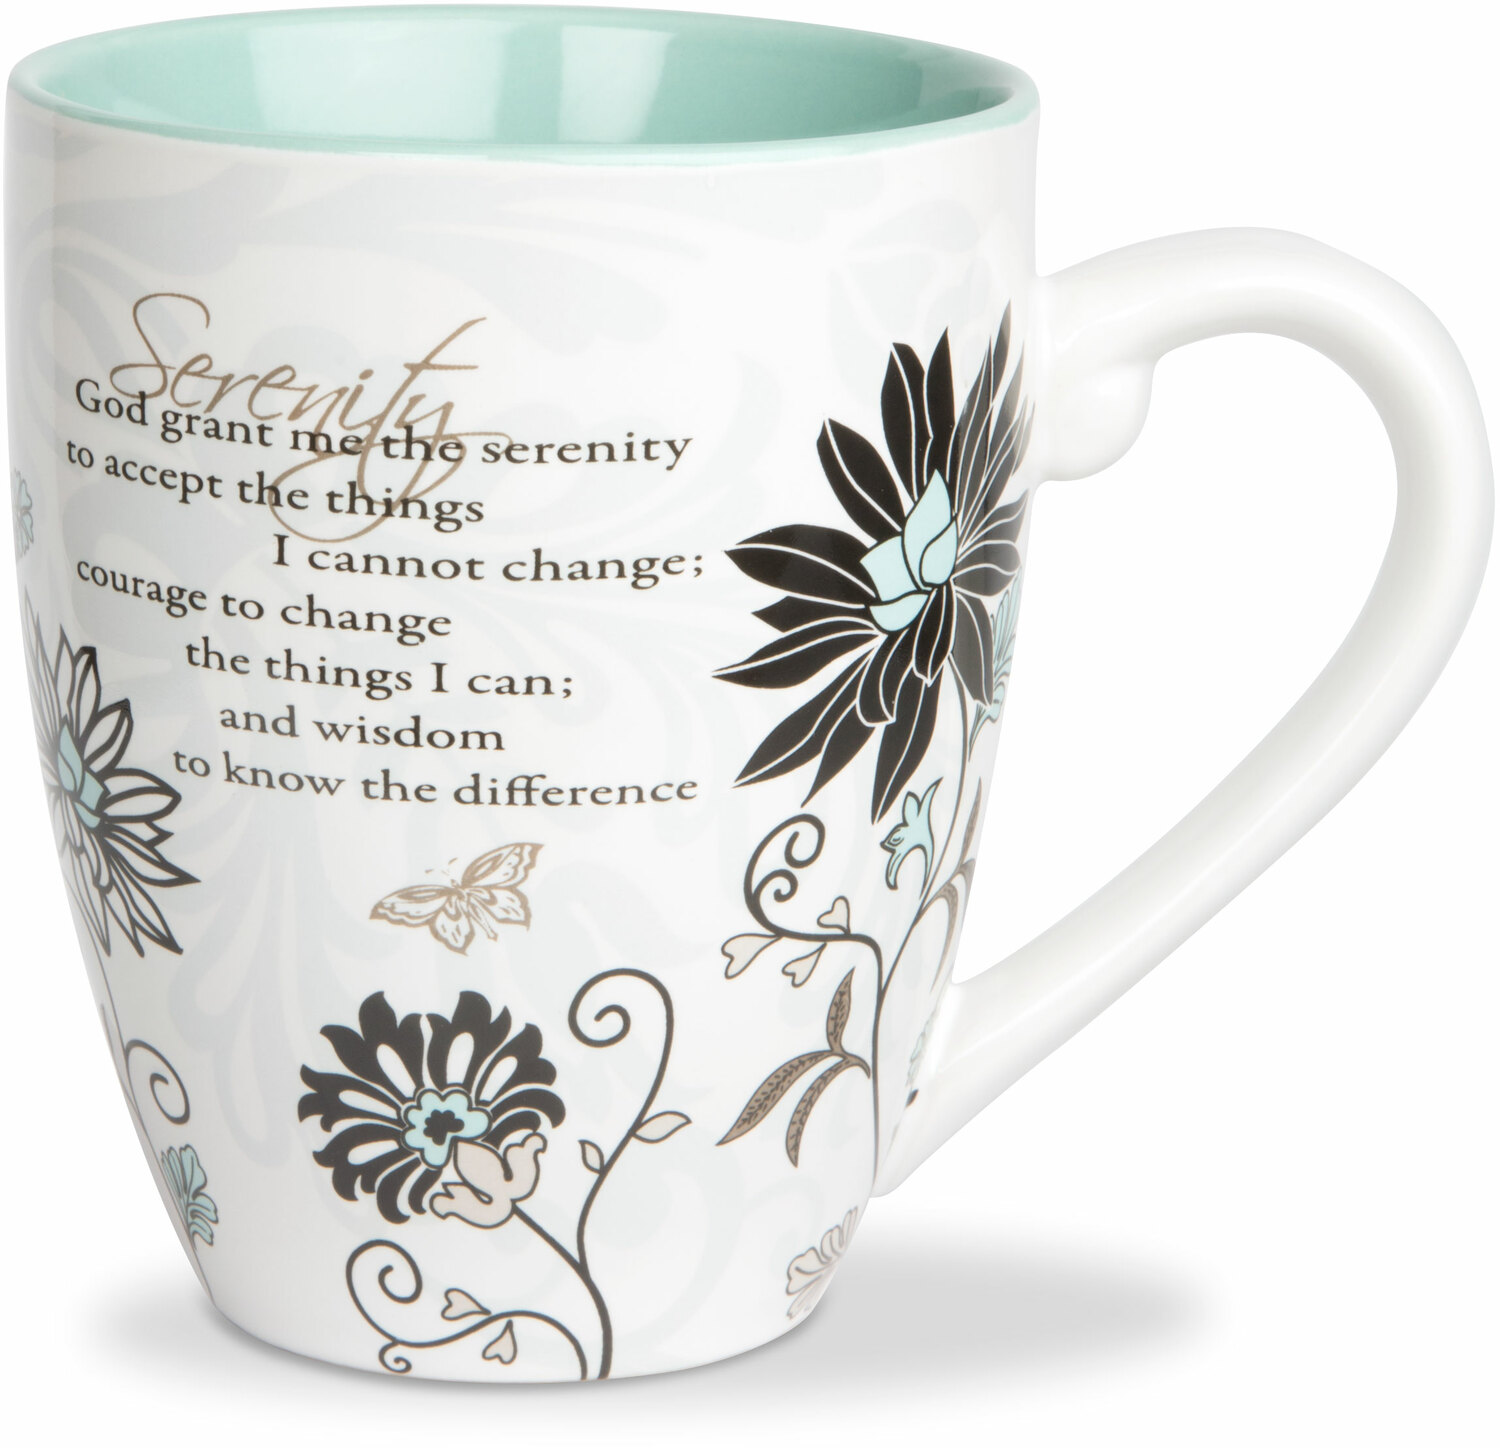 Serenity Prayer by Mark My Words - <em>Serenity</em> - Large Coffee/Tea Mug, 20 oz -